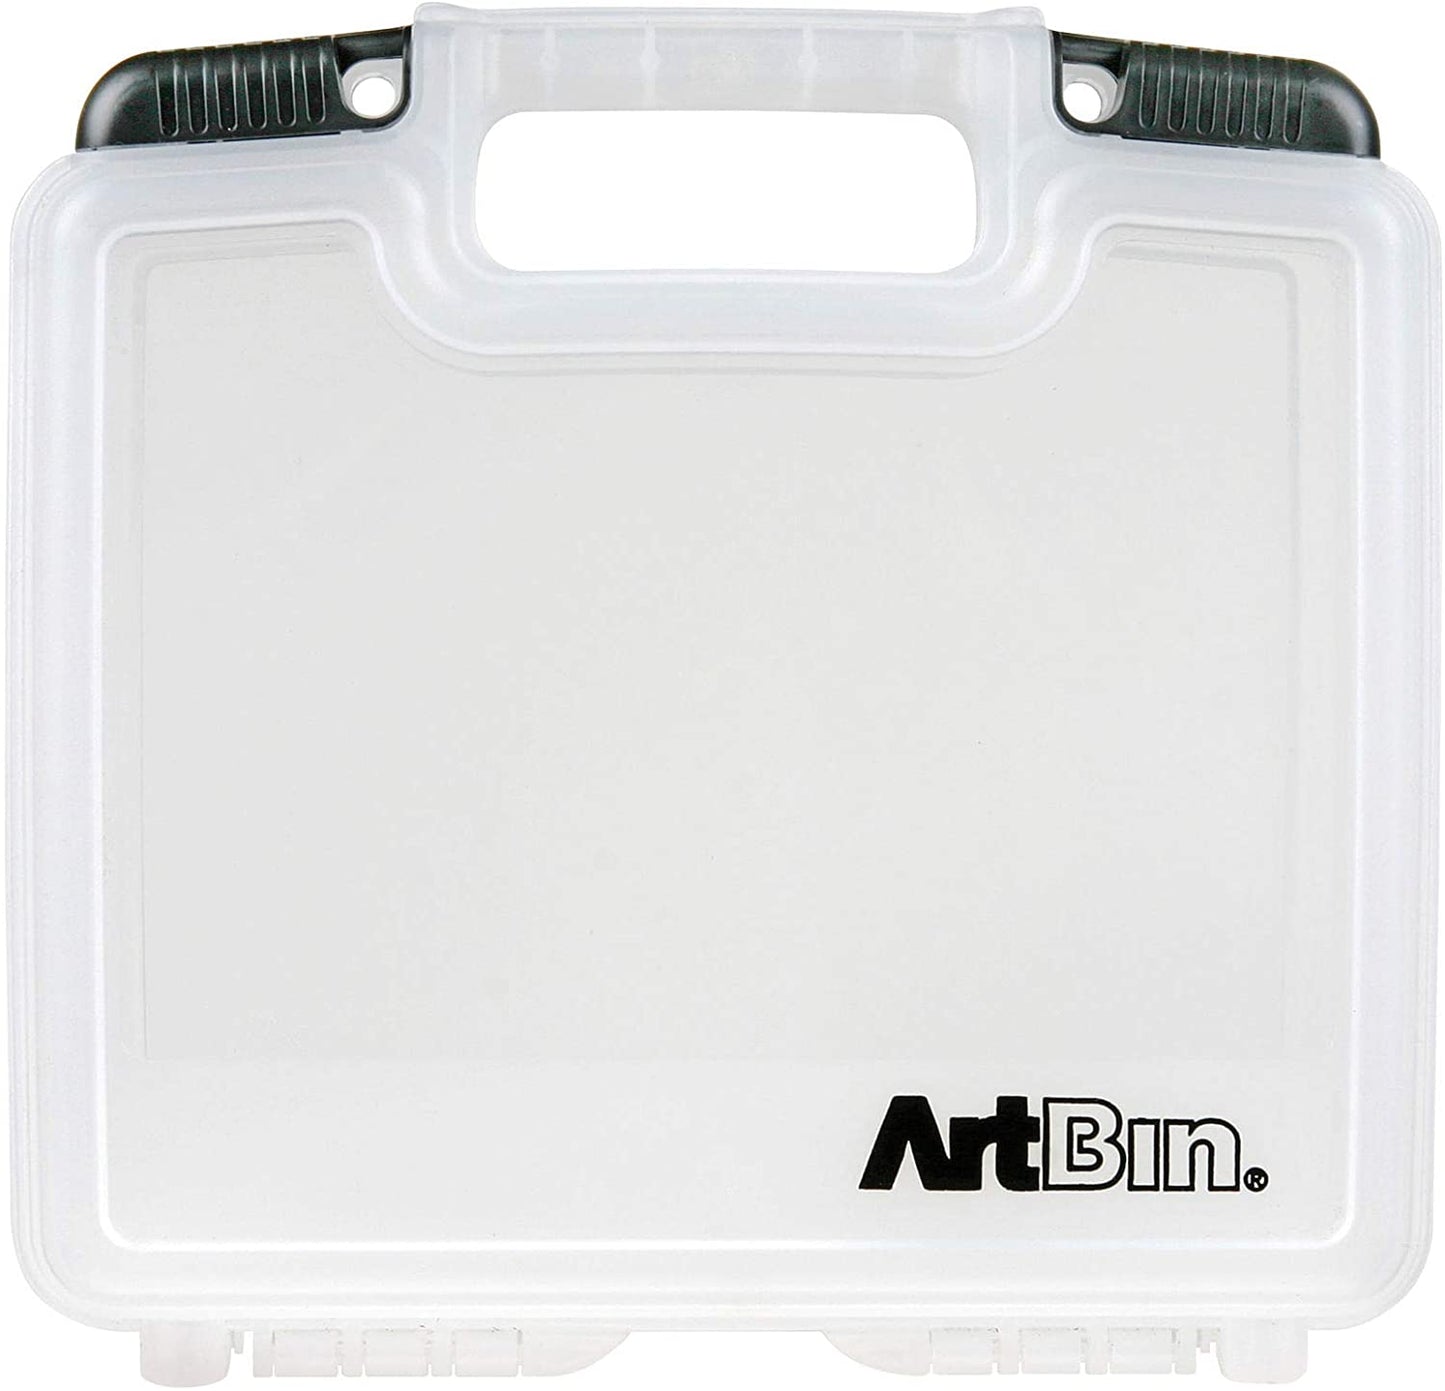 ArtBin Quick View Case - 10 inch - by ArtBin - K. A. Artist Shop